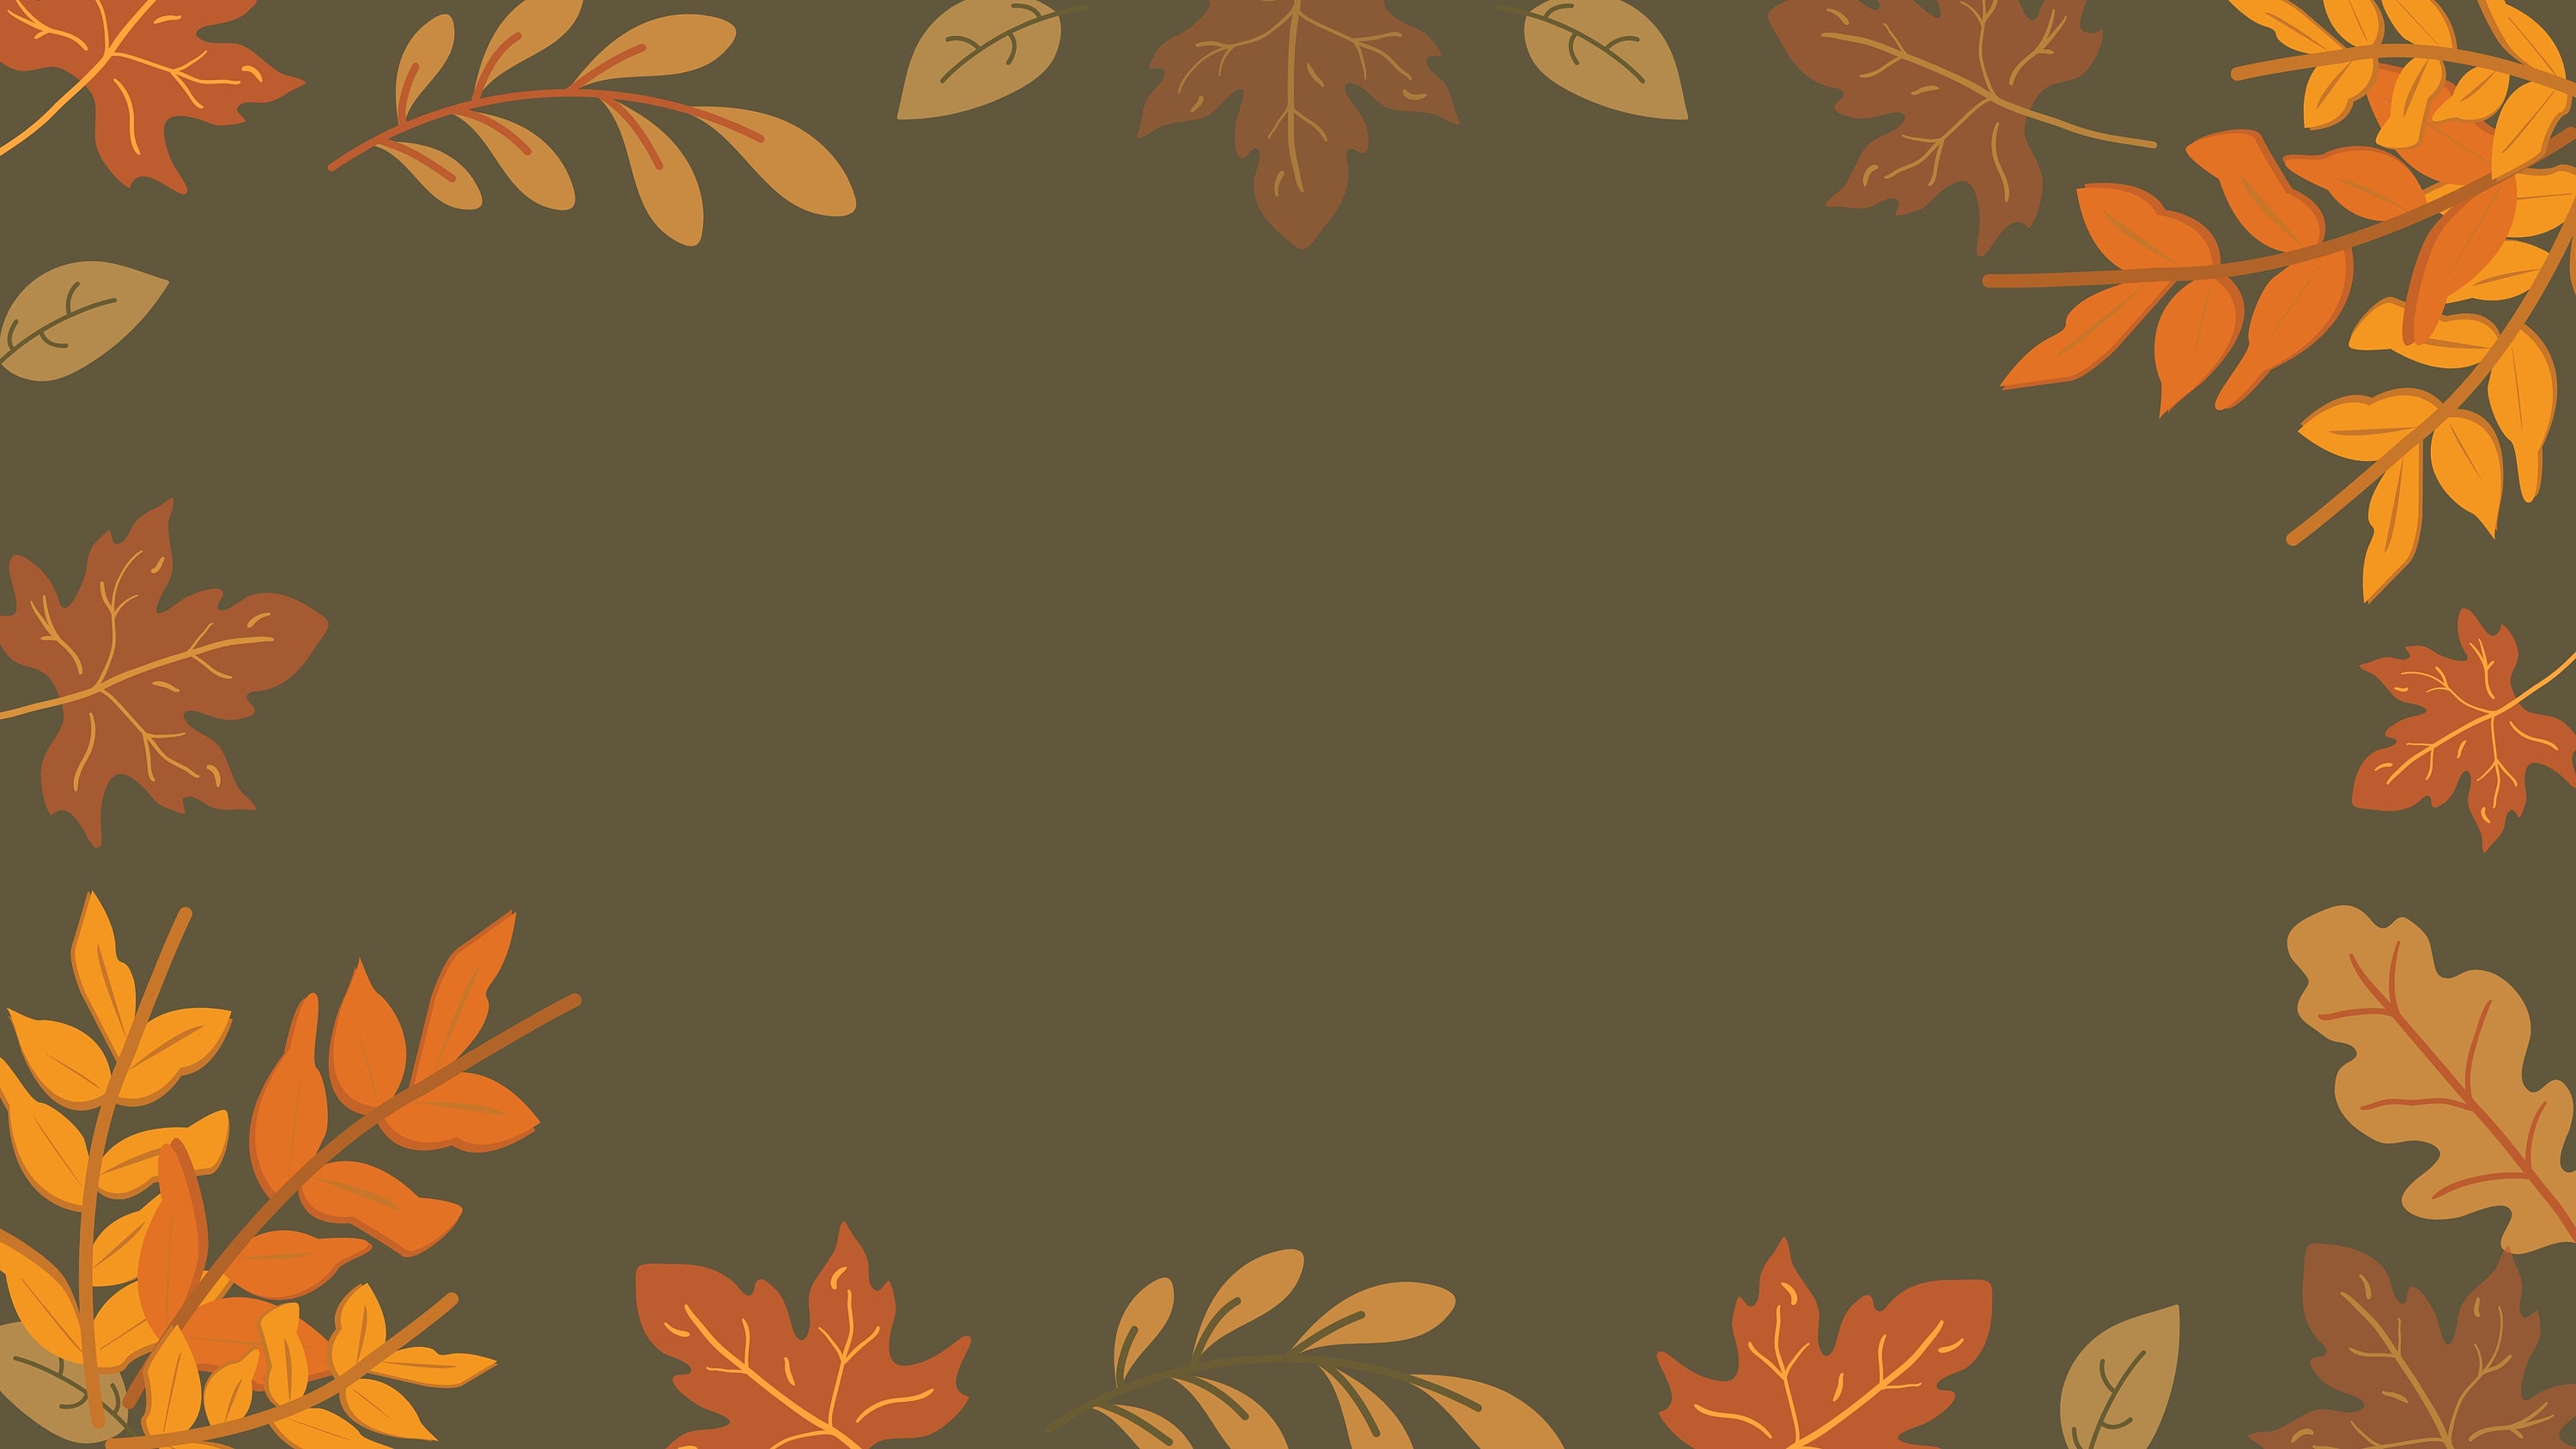 Beautiful Free Fall Wallpaper and Desktop Backgrounds - Vandelay Design